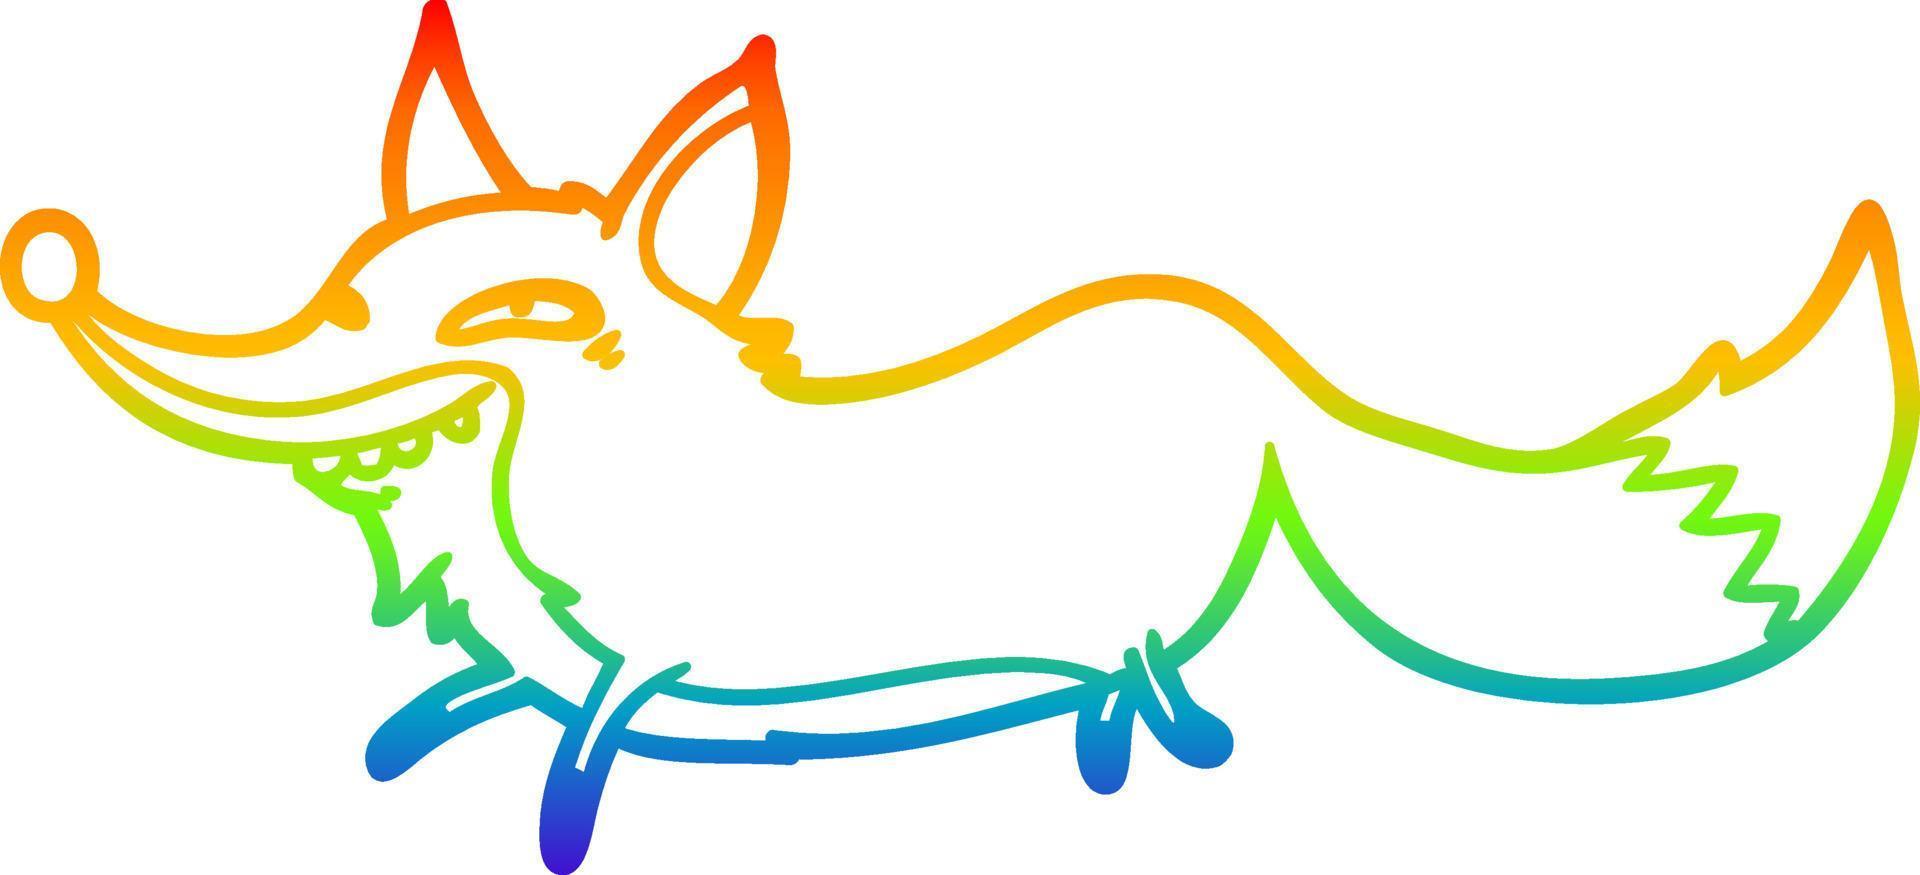 dibujo de línea de gradiente de arco iris zorro astuto de dibujos animados lindo vector